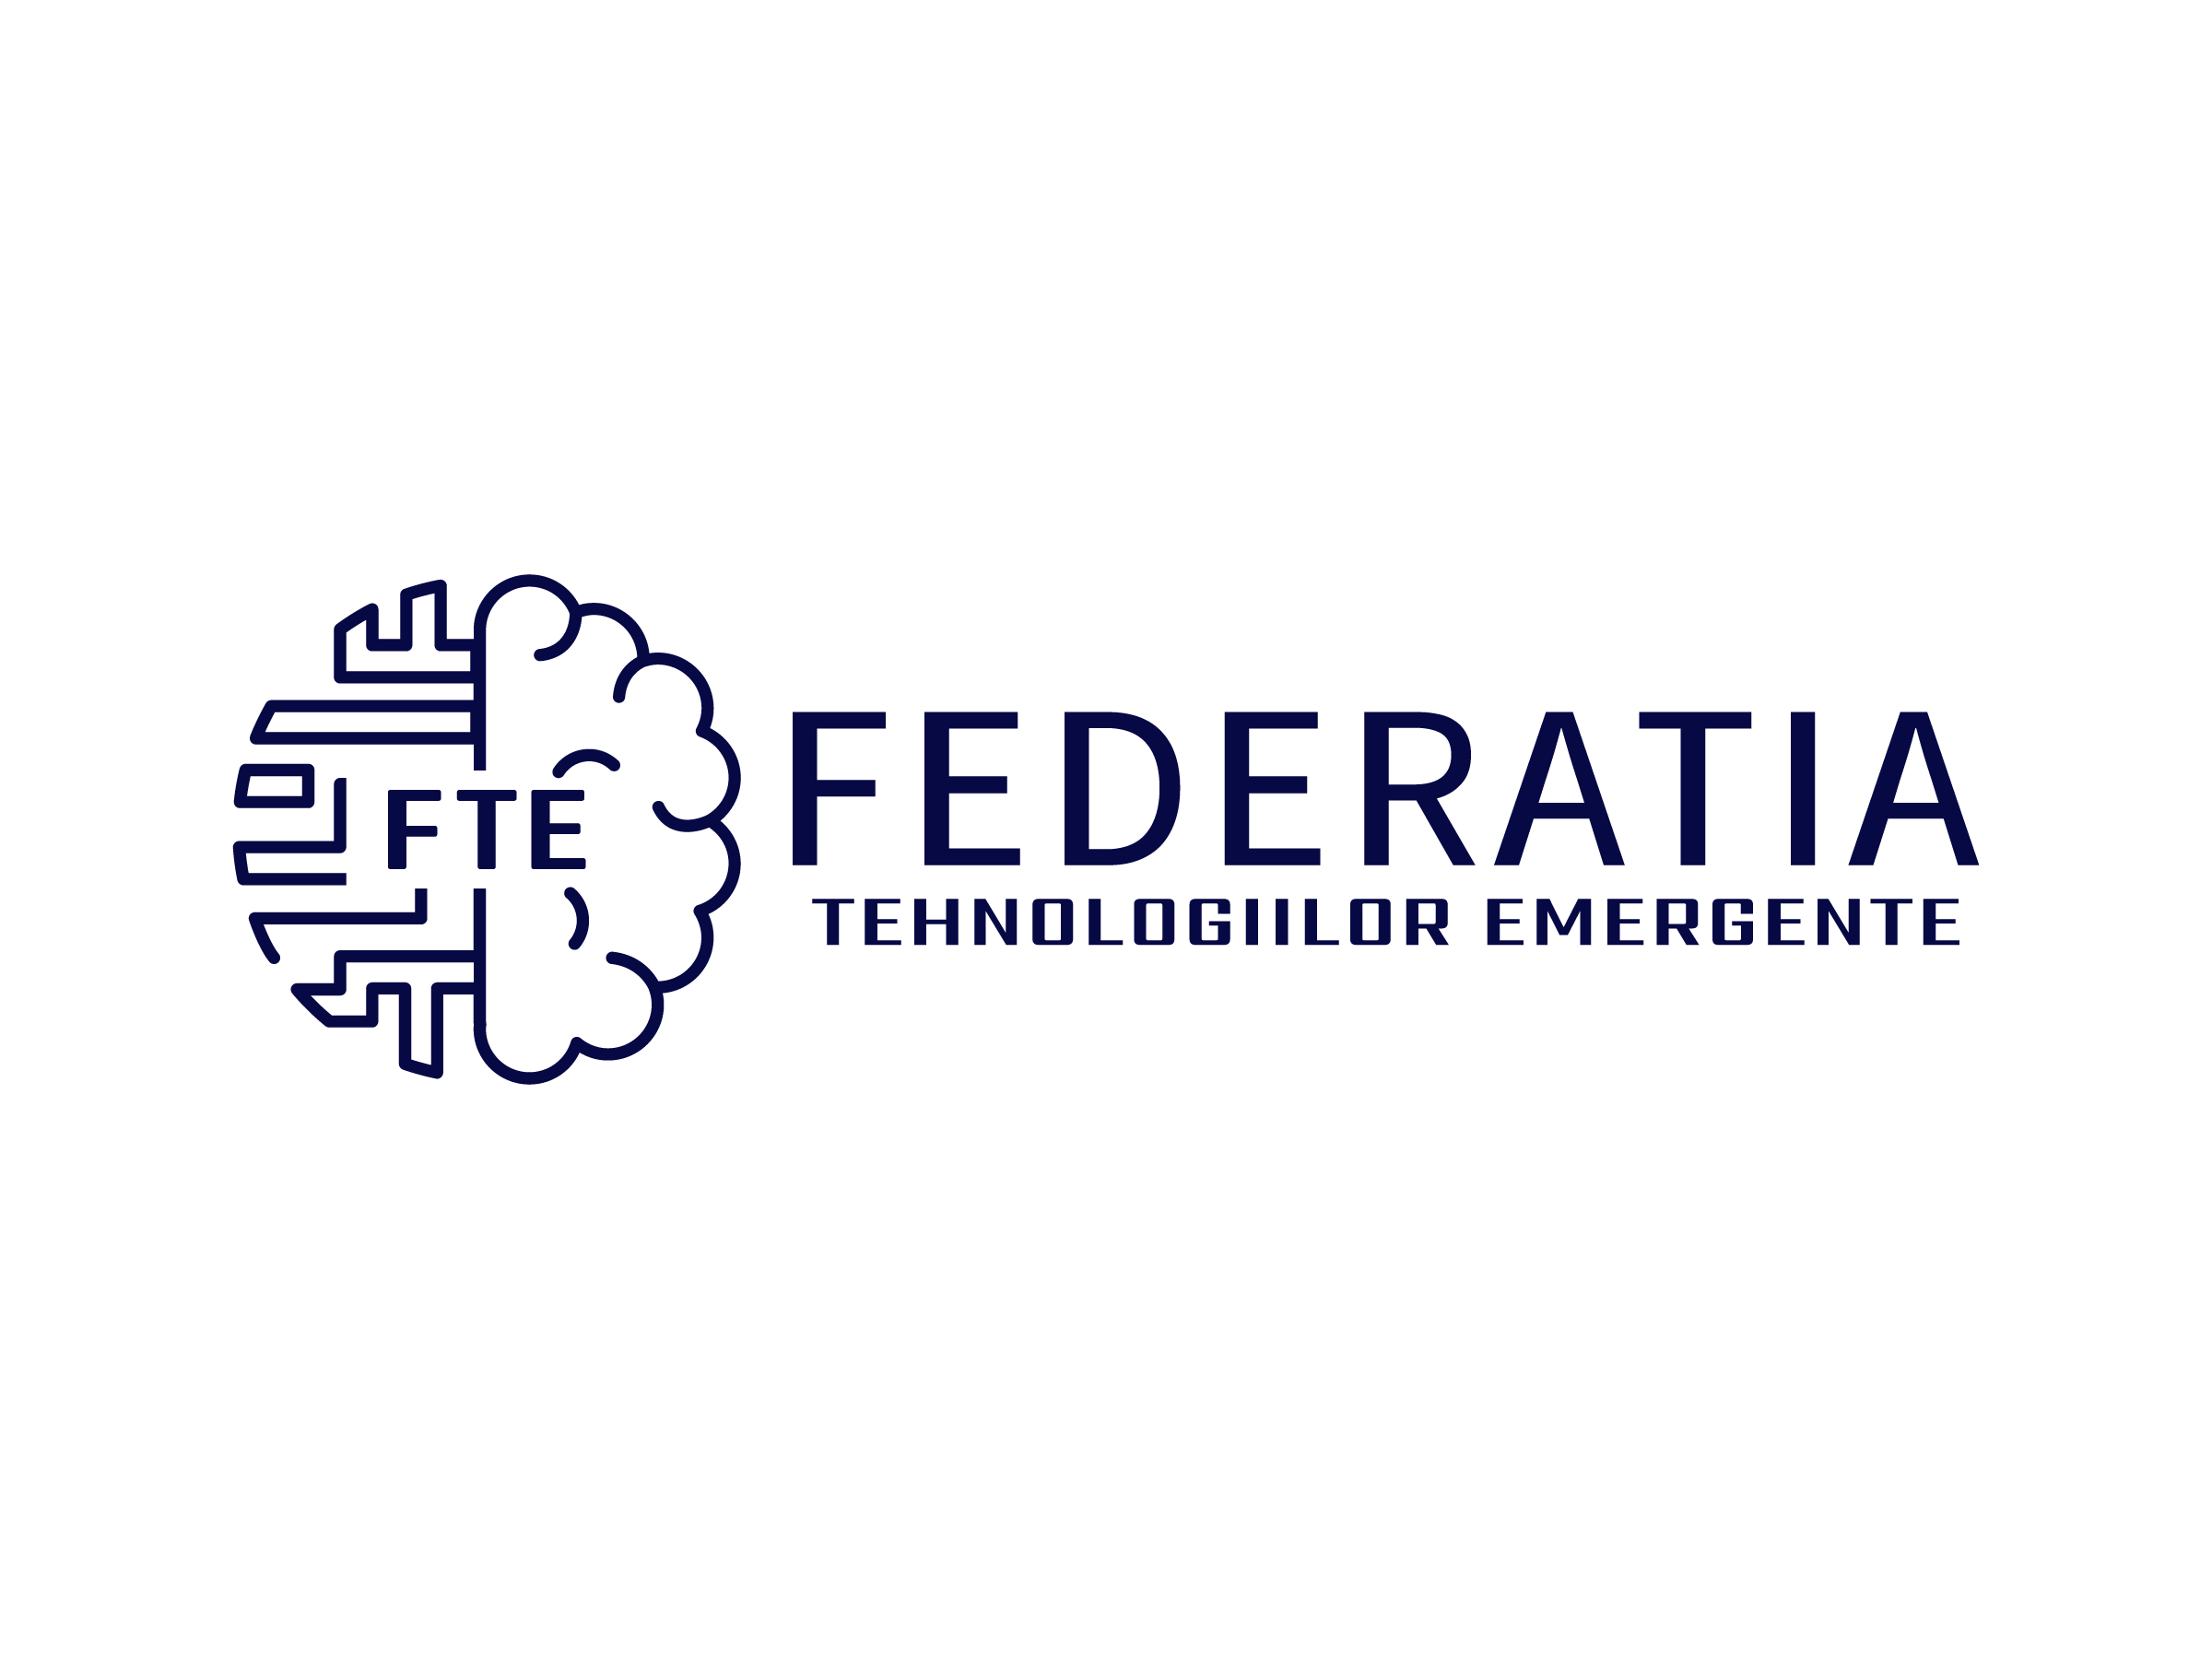 FEDERATIA TEHNOLOGIILOR EMERGENTE logo